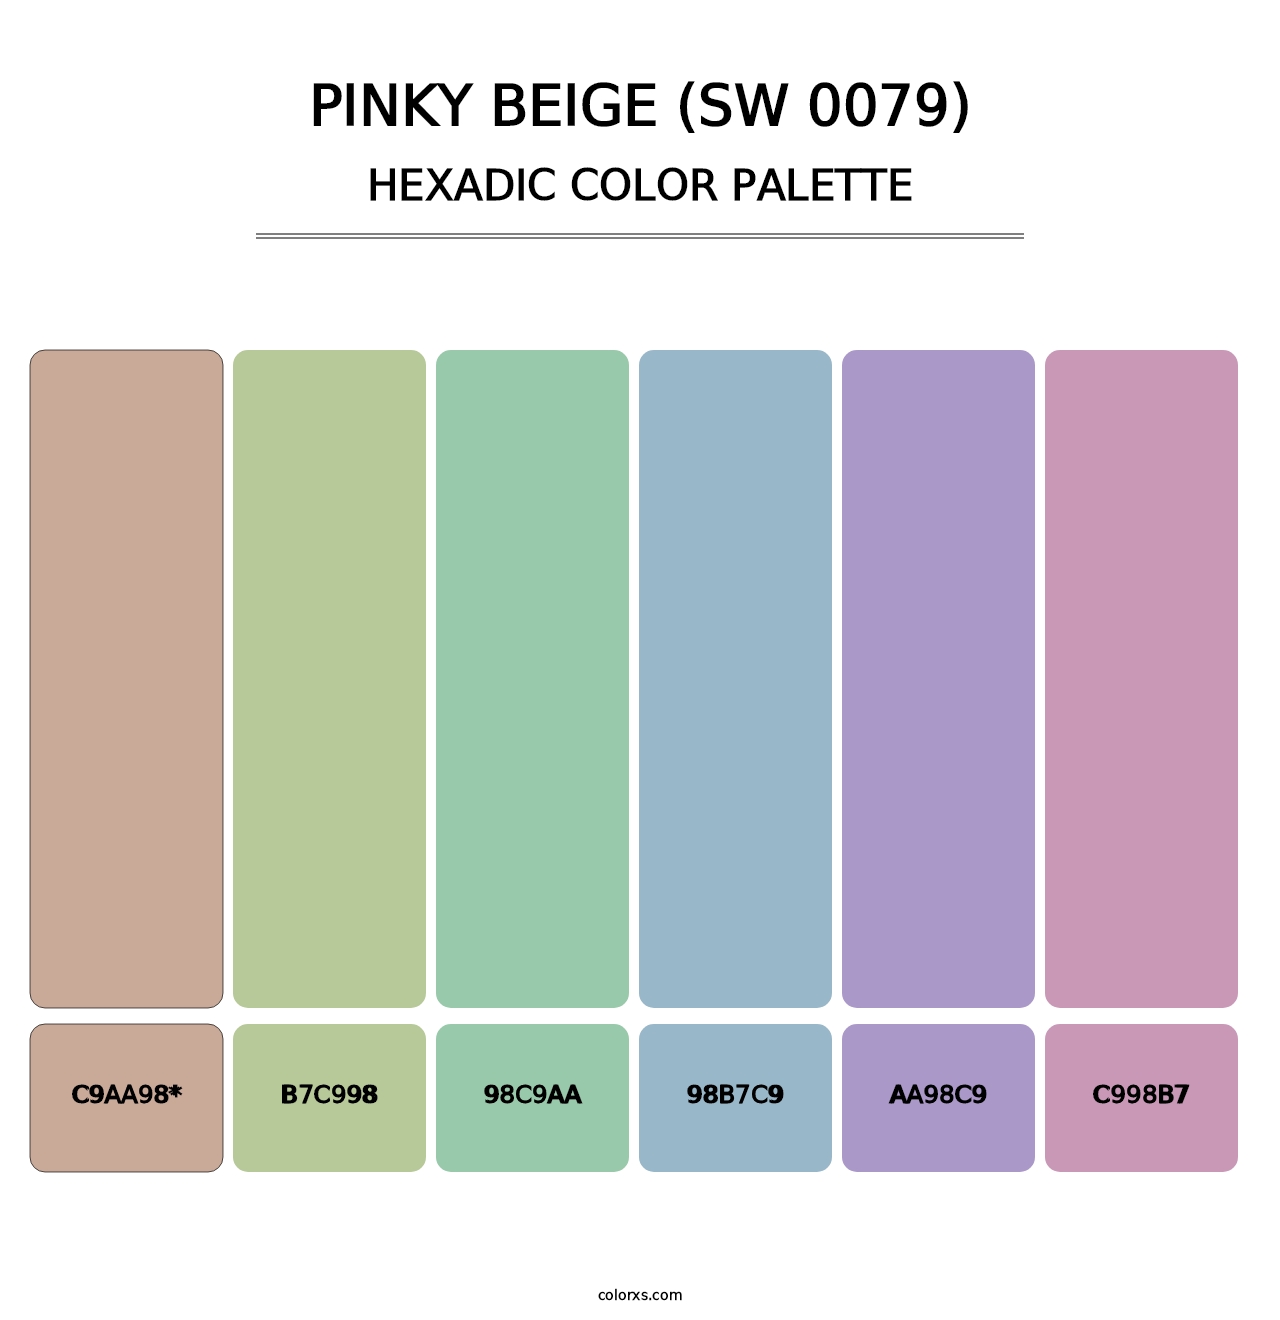 Pinky Beige (SW 0079) - Hexadic Color Palette